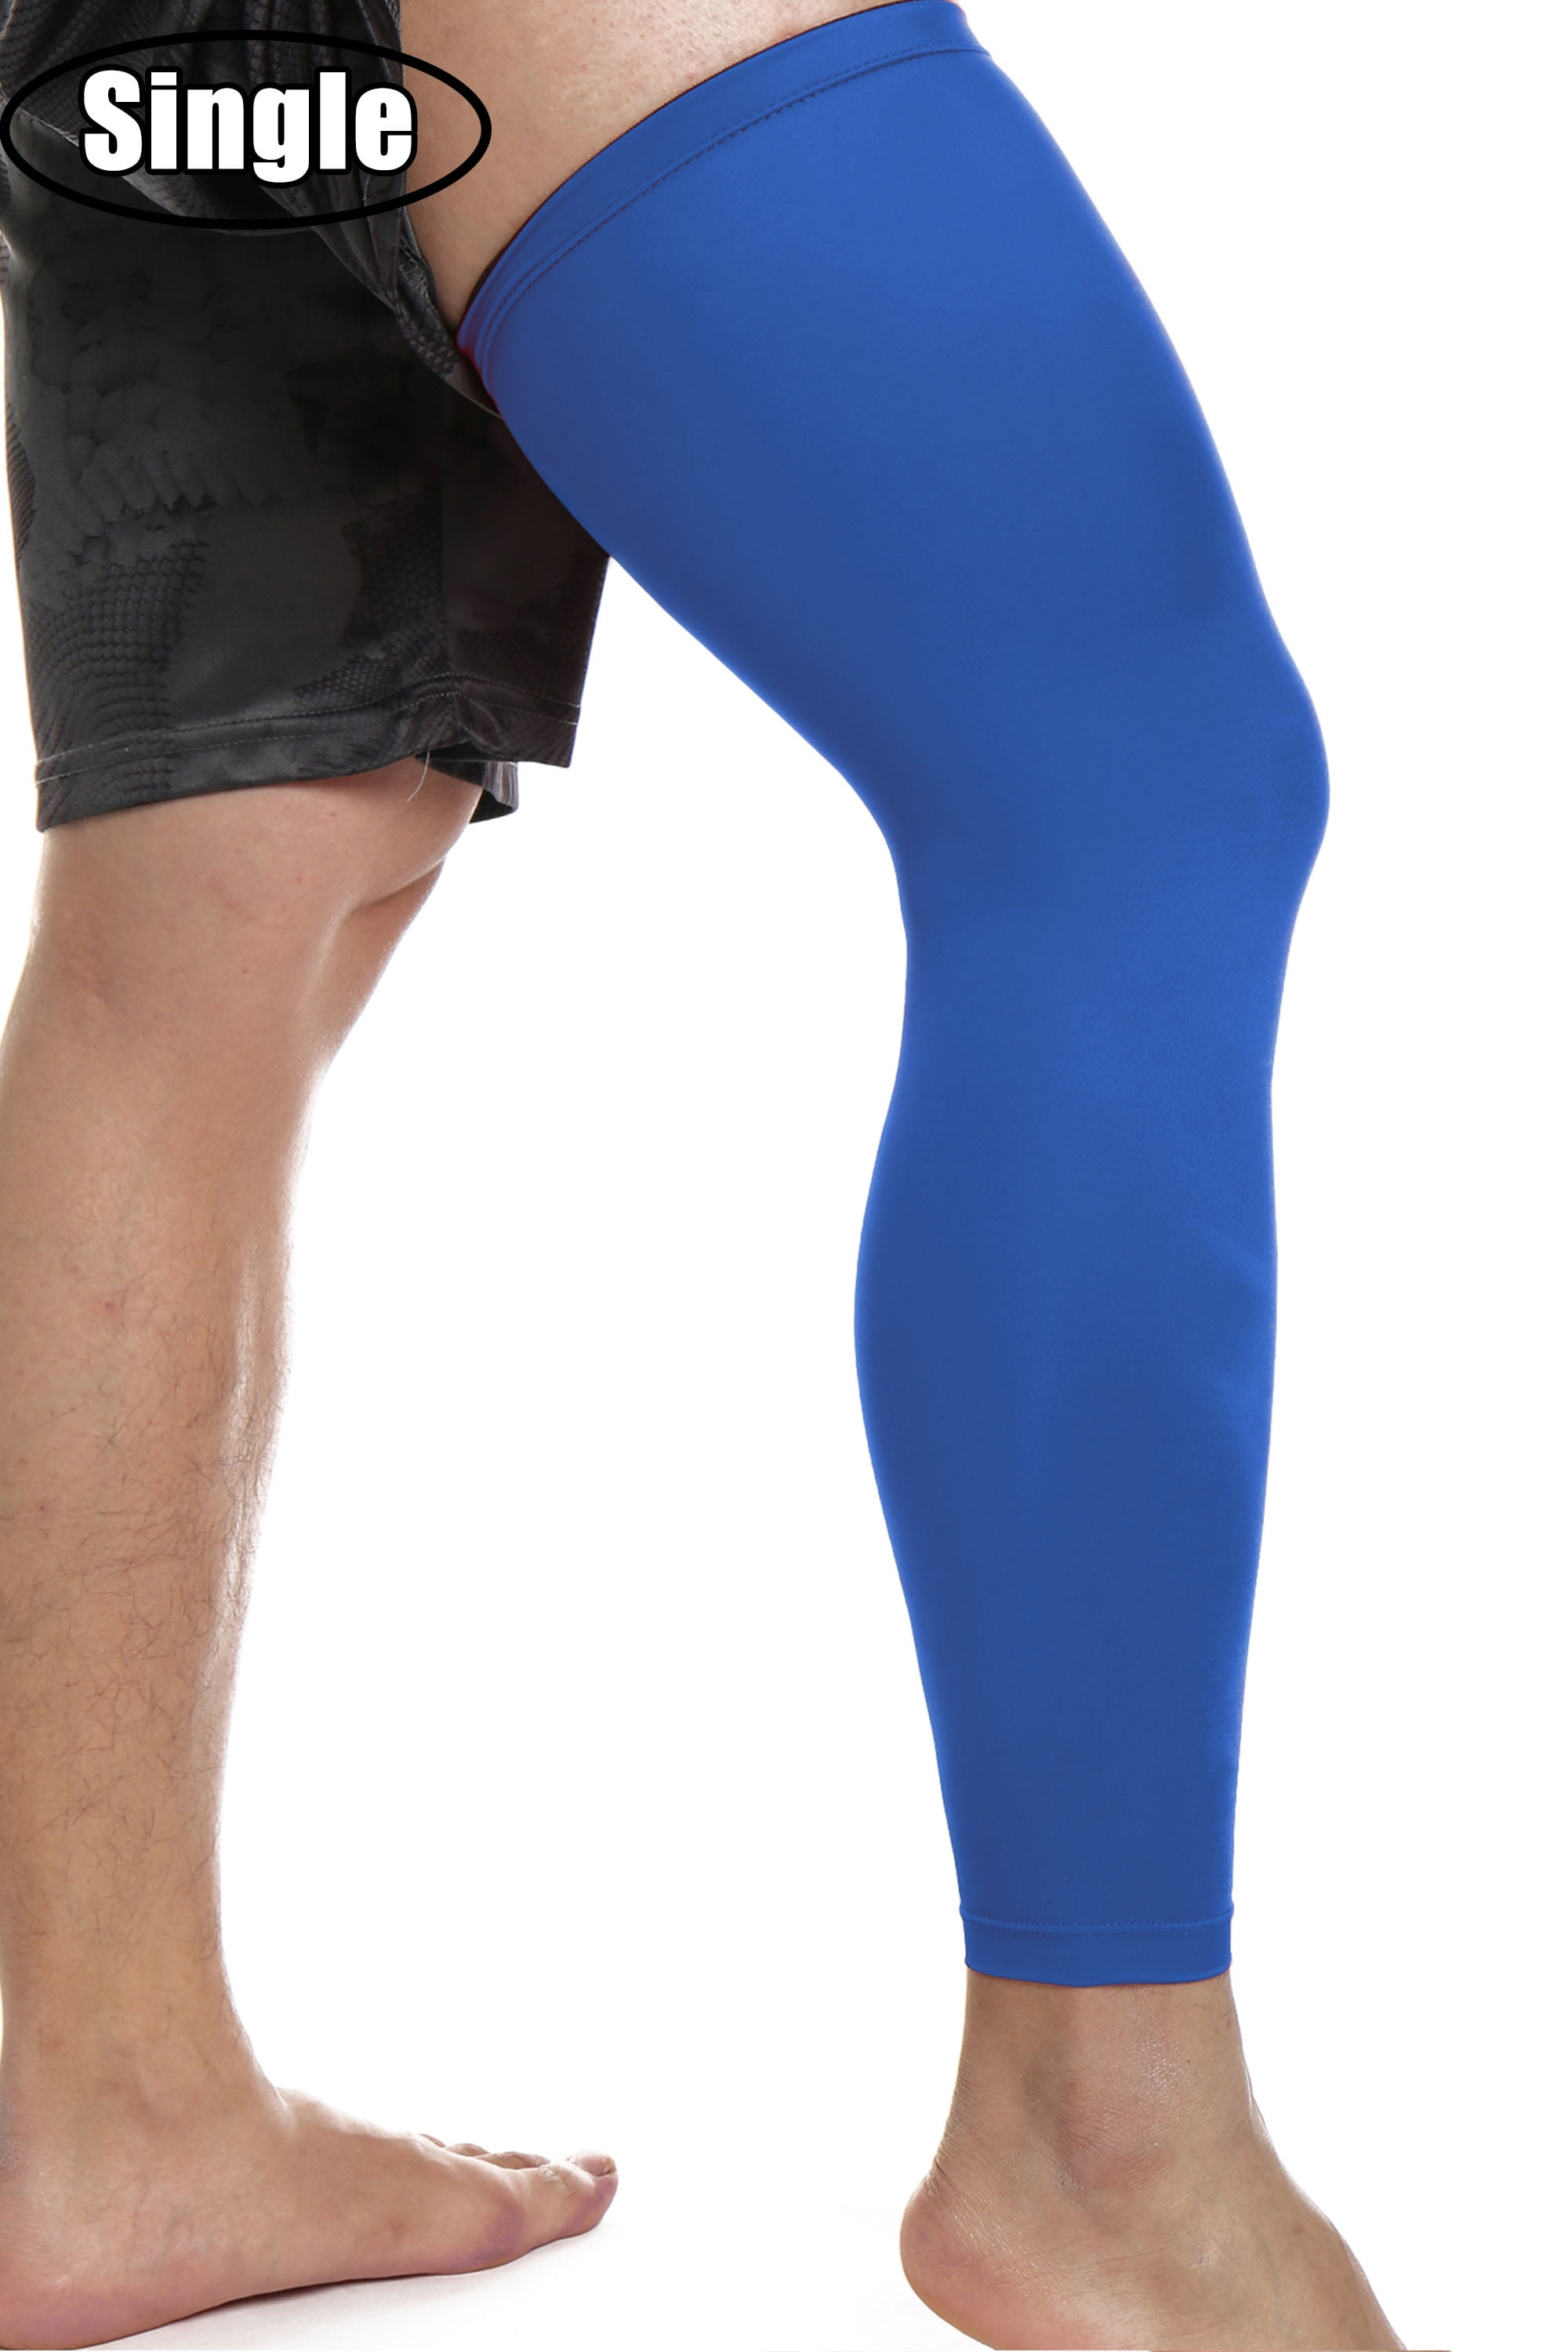 Details about   Compression Long Sleeve Support Leg Knee Brace Socks Sport Pain Relief Men Women 